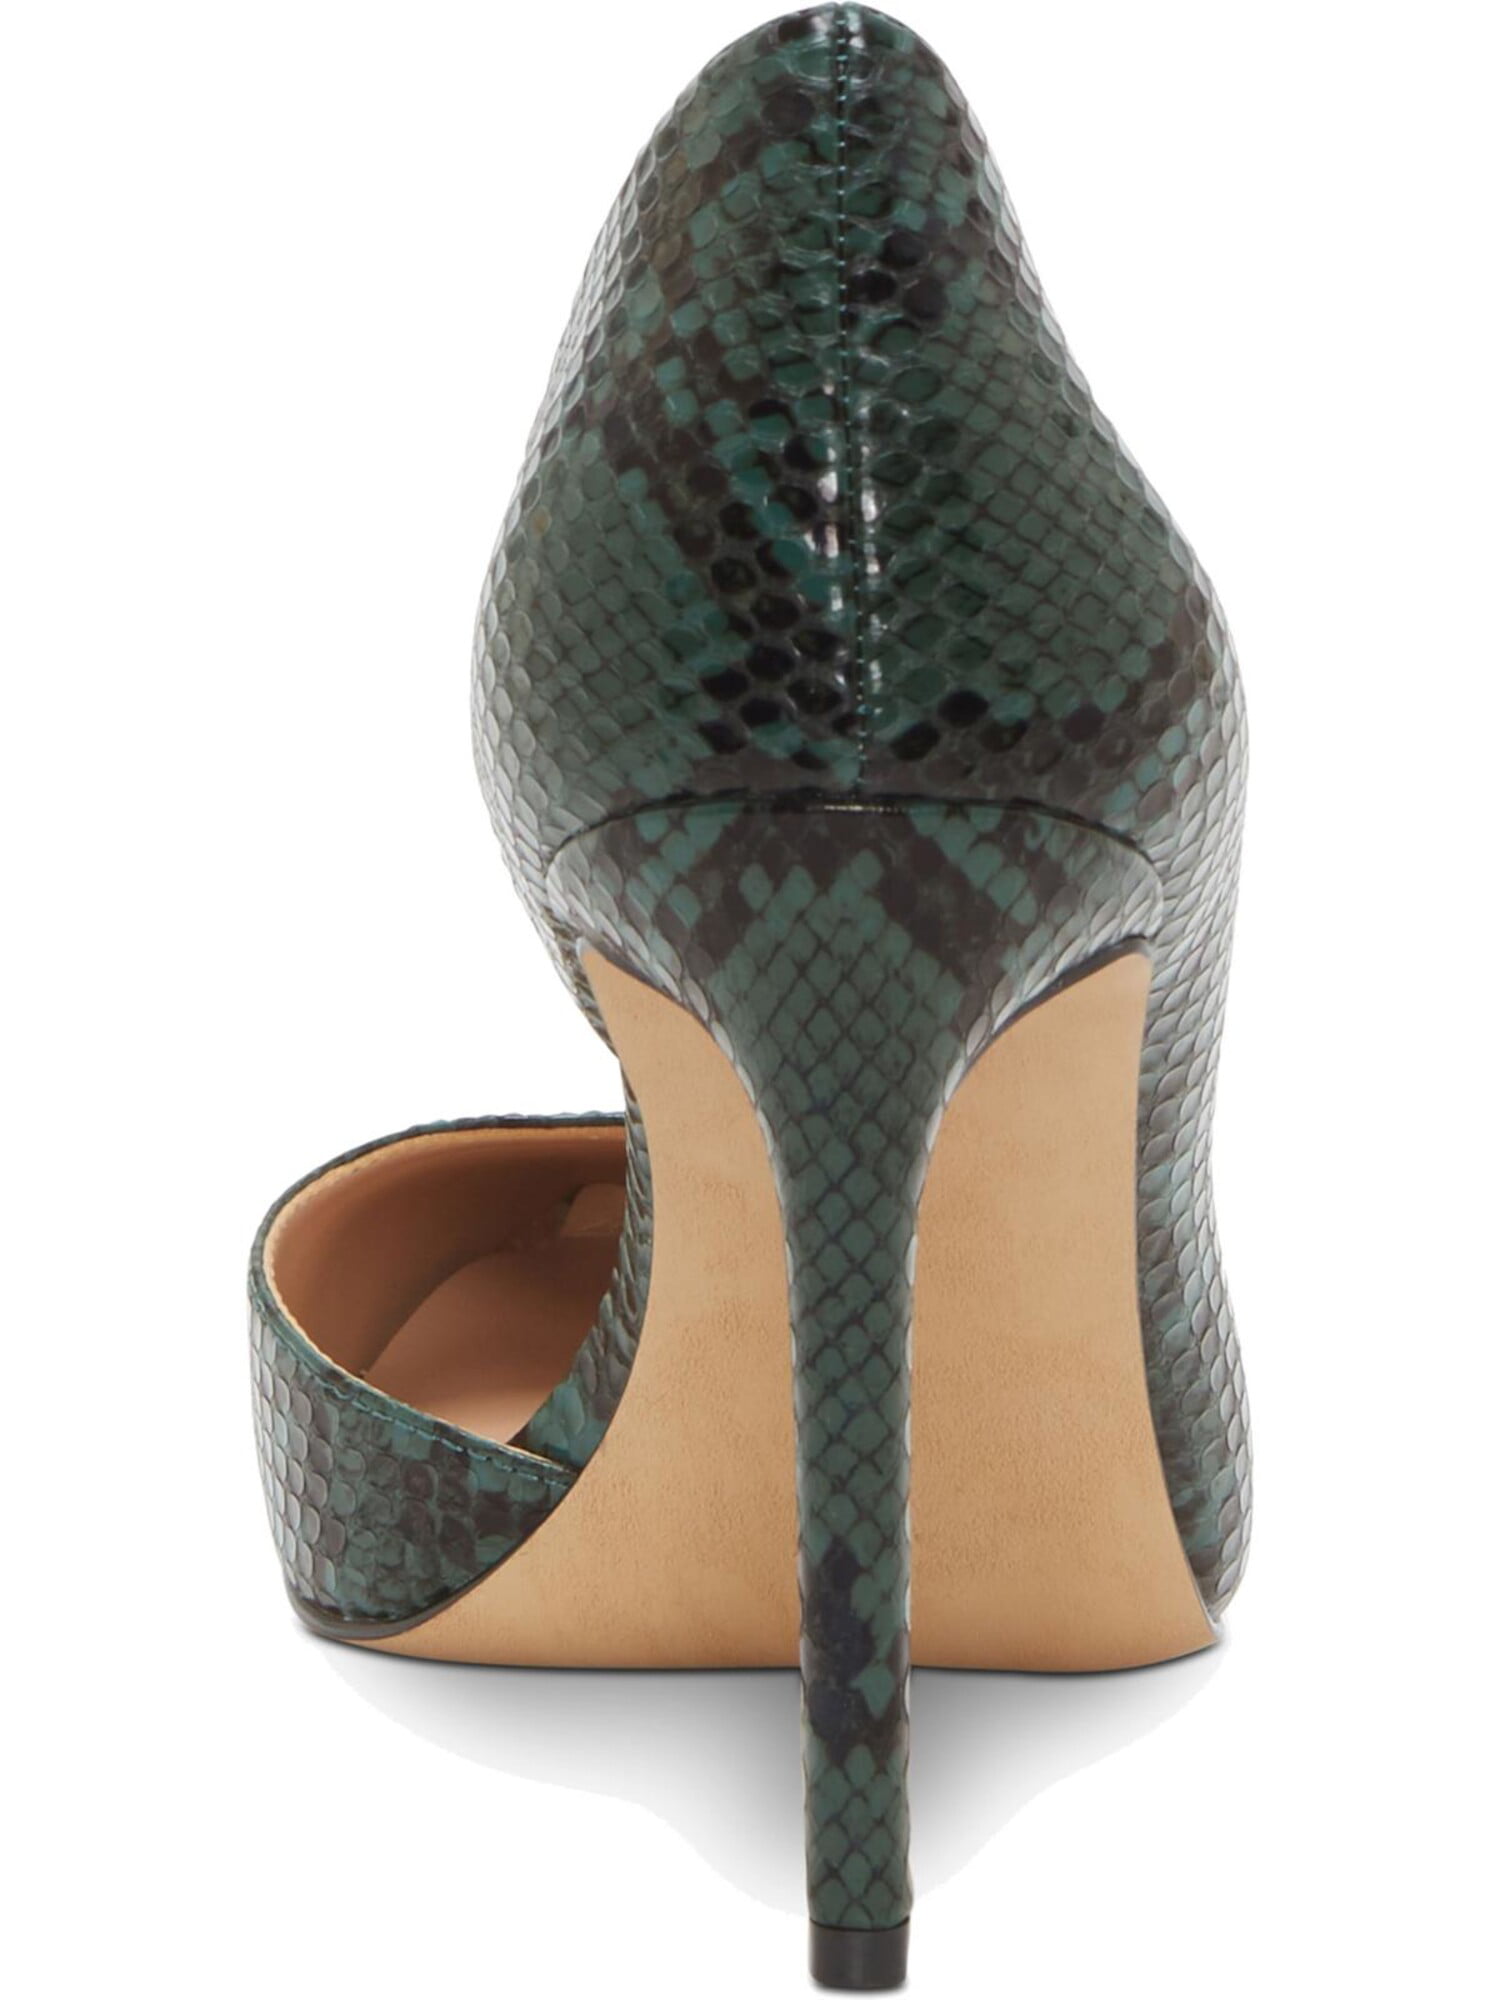 kate spade | Shoes | Kate Spade Dorsay Open Toe 3 Heels Green Snakeskin  Heels Size 9 | Poshmark